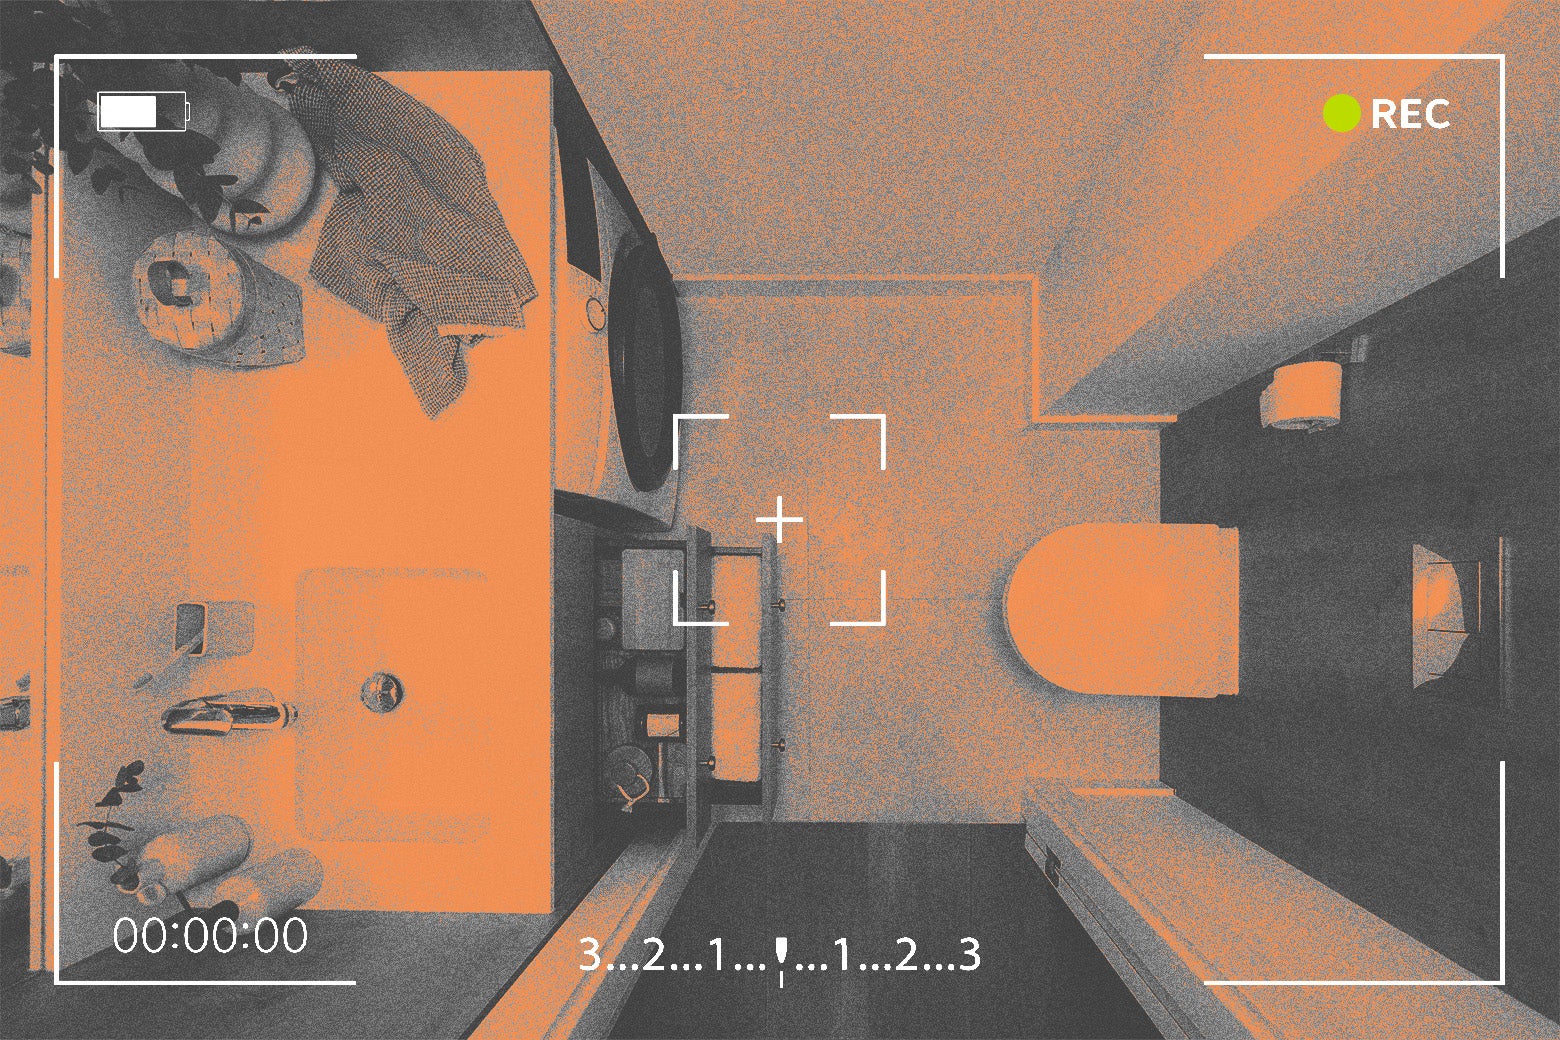 An empty bathroom seen overhead through what looks like a security camera